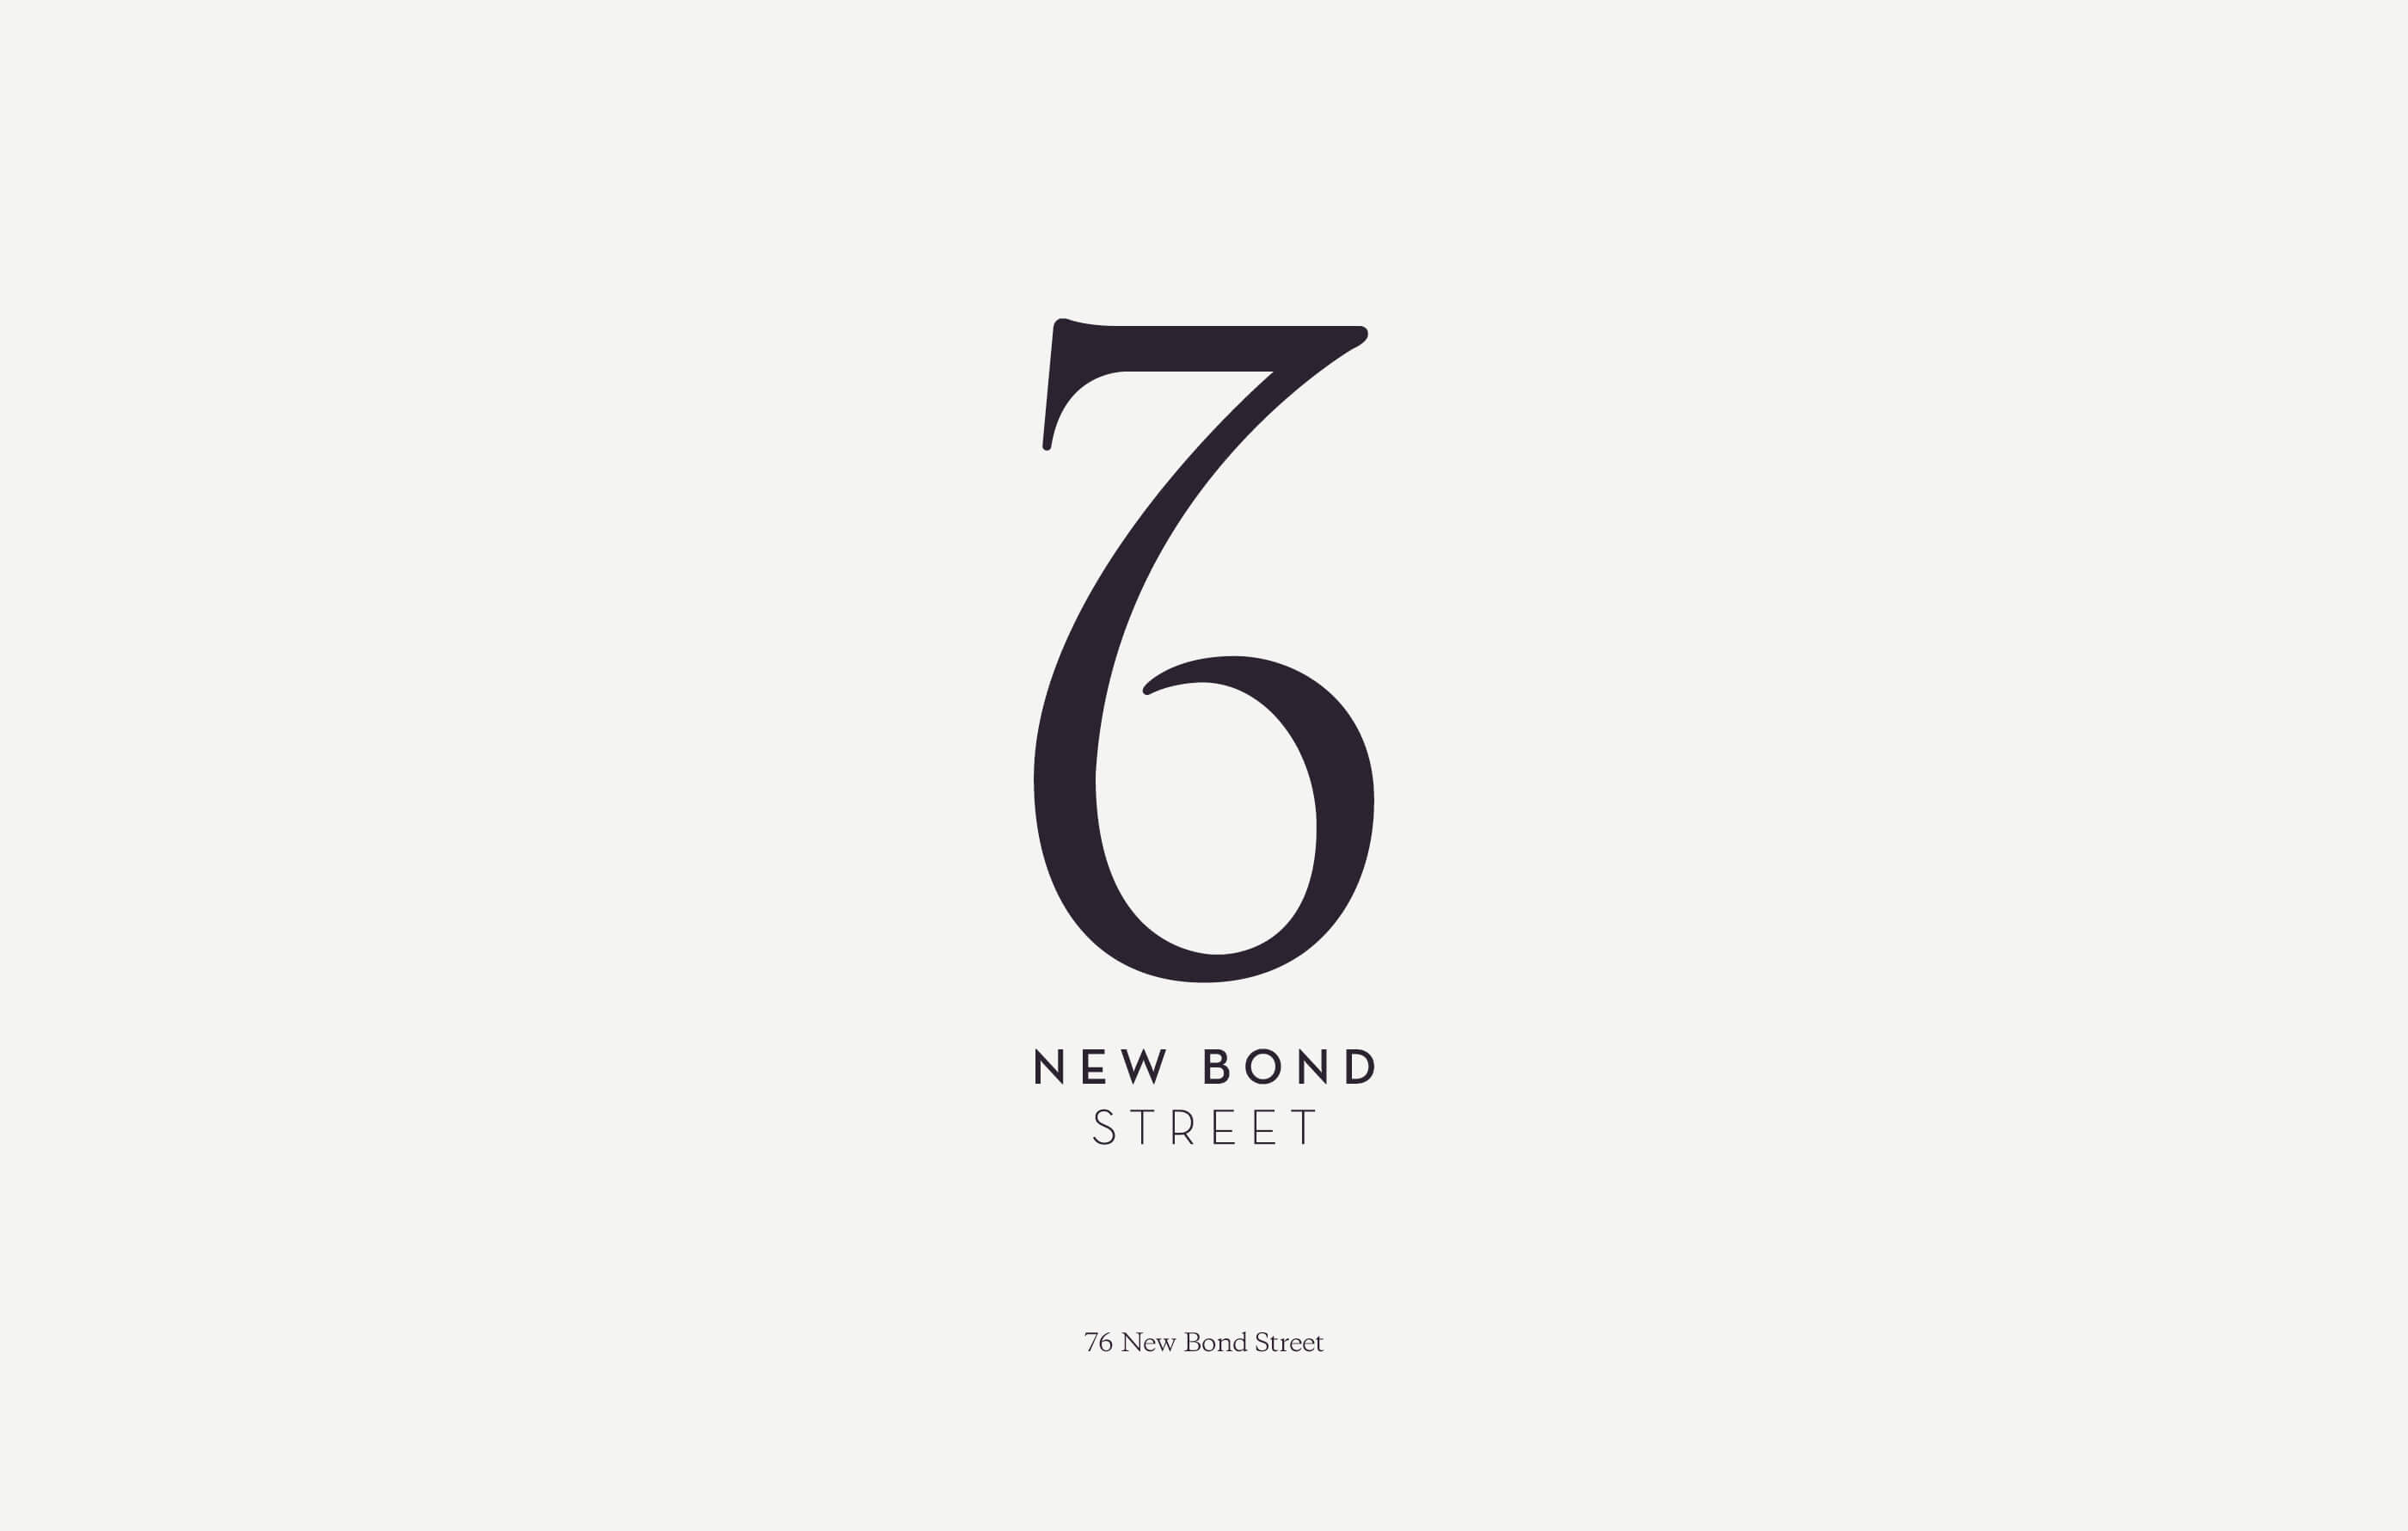 Black 76 New Bond Street branding on a grey background